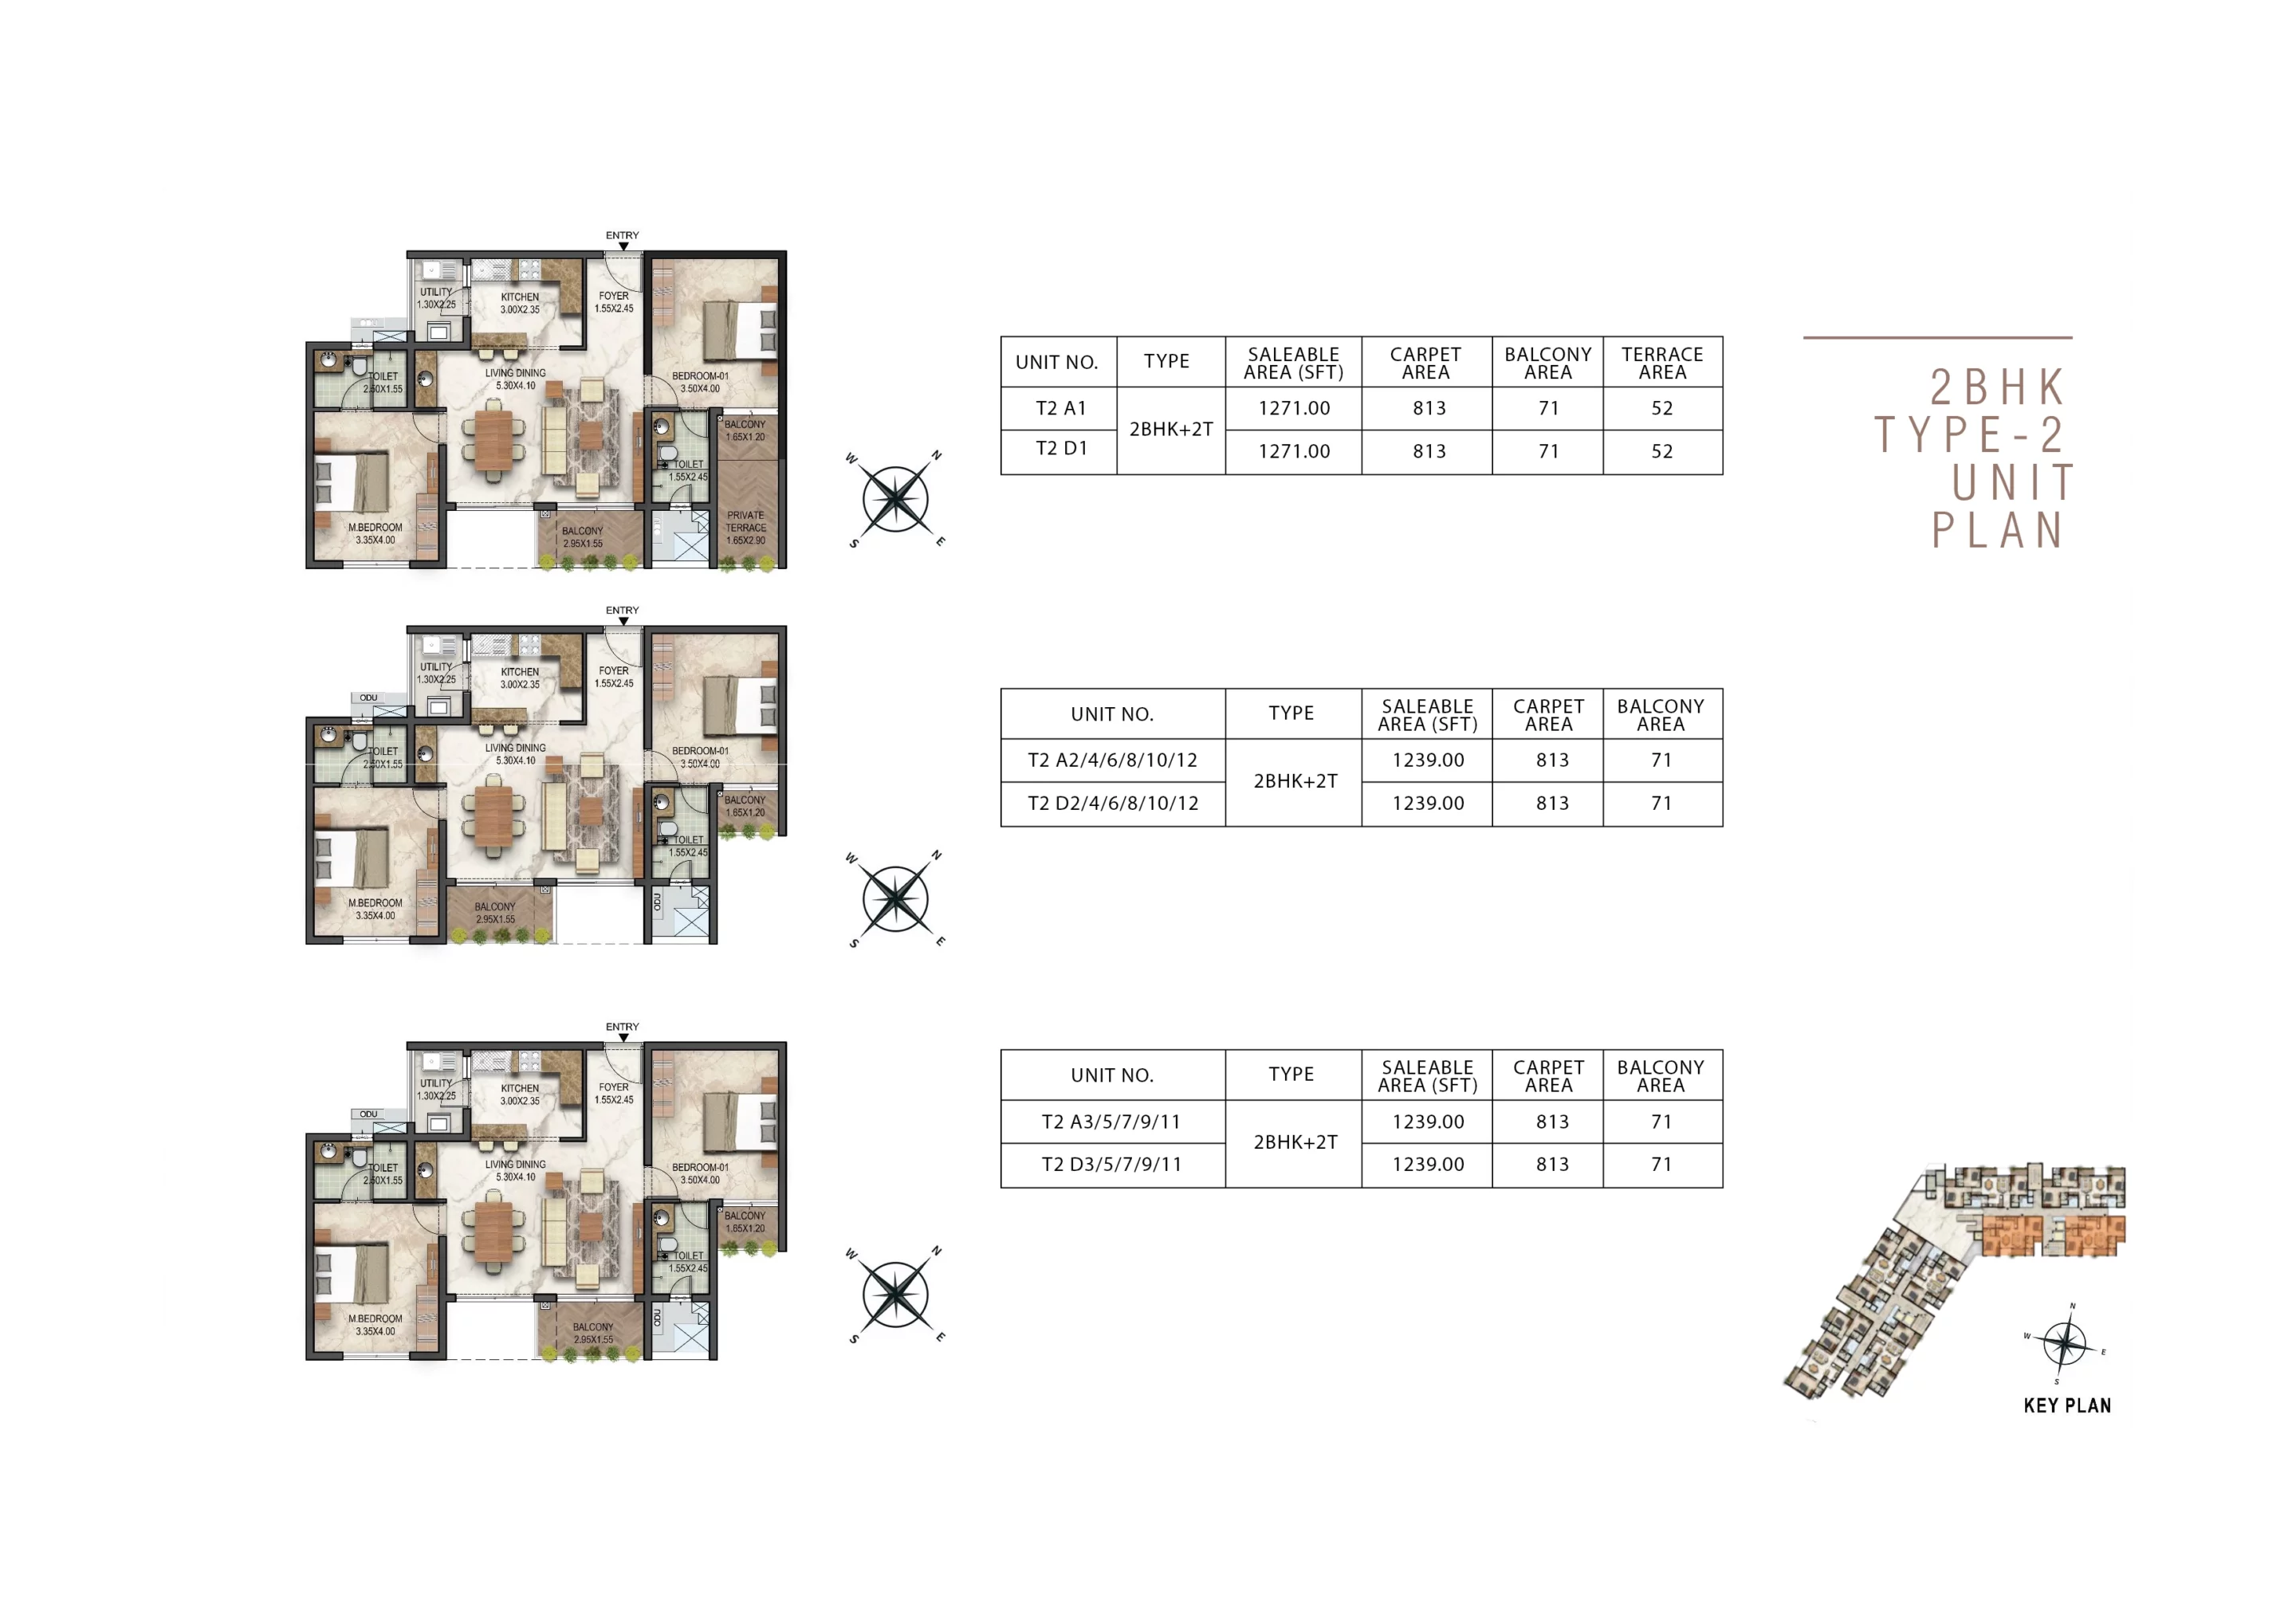 new 2 bhk type-2 unit plan with 2 toilets luxury apartment floor plan starting at 1200sqft in akkulam trivandrum